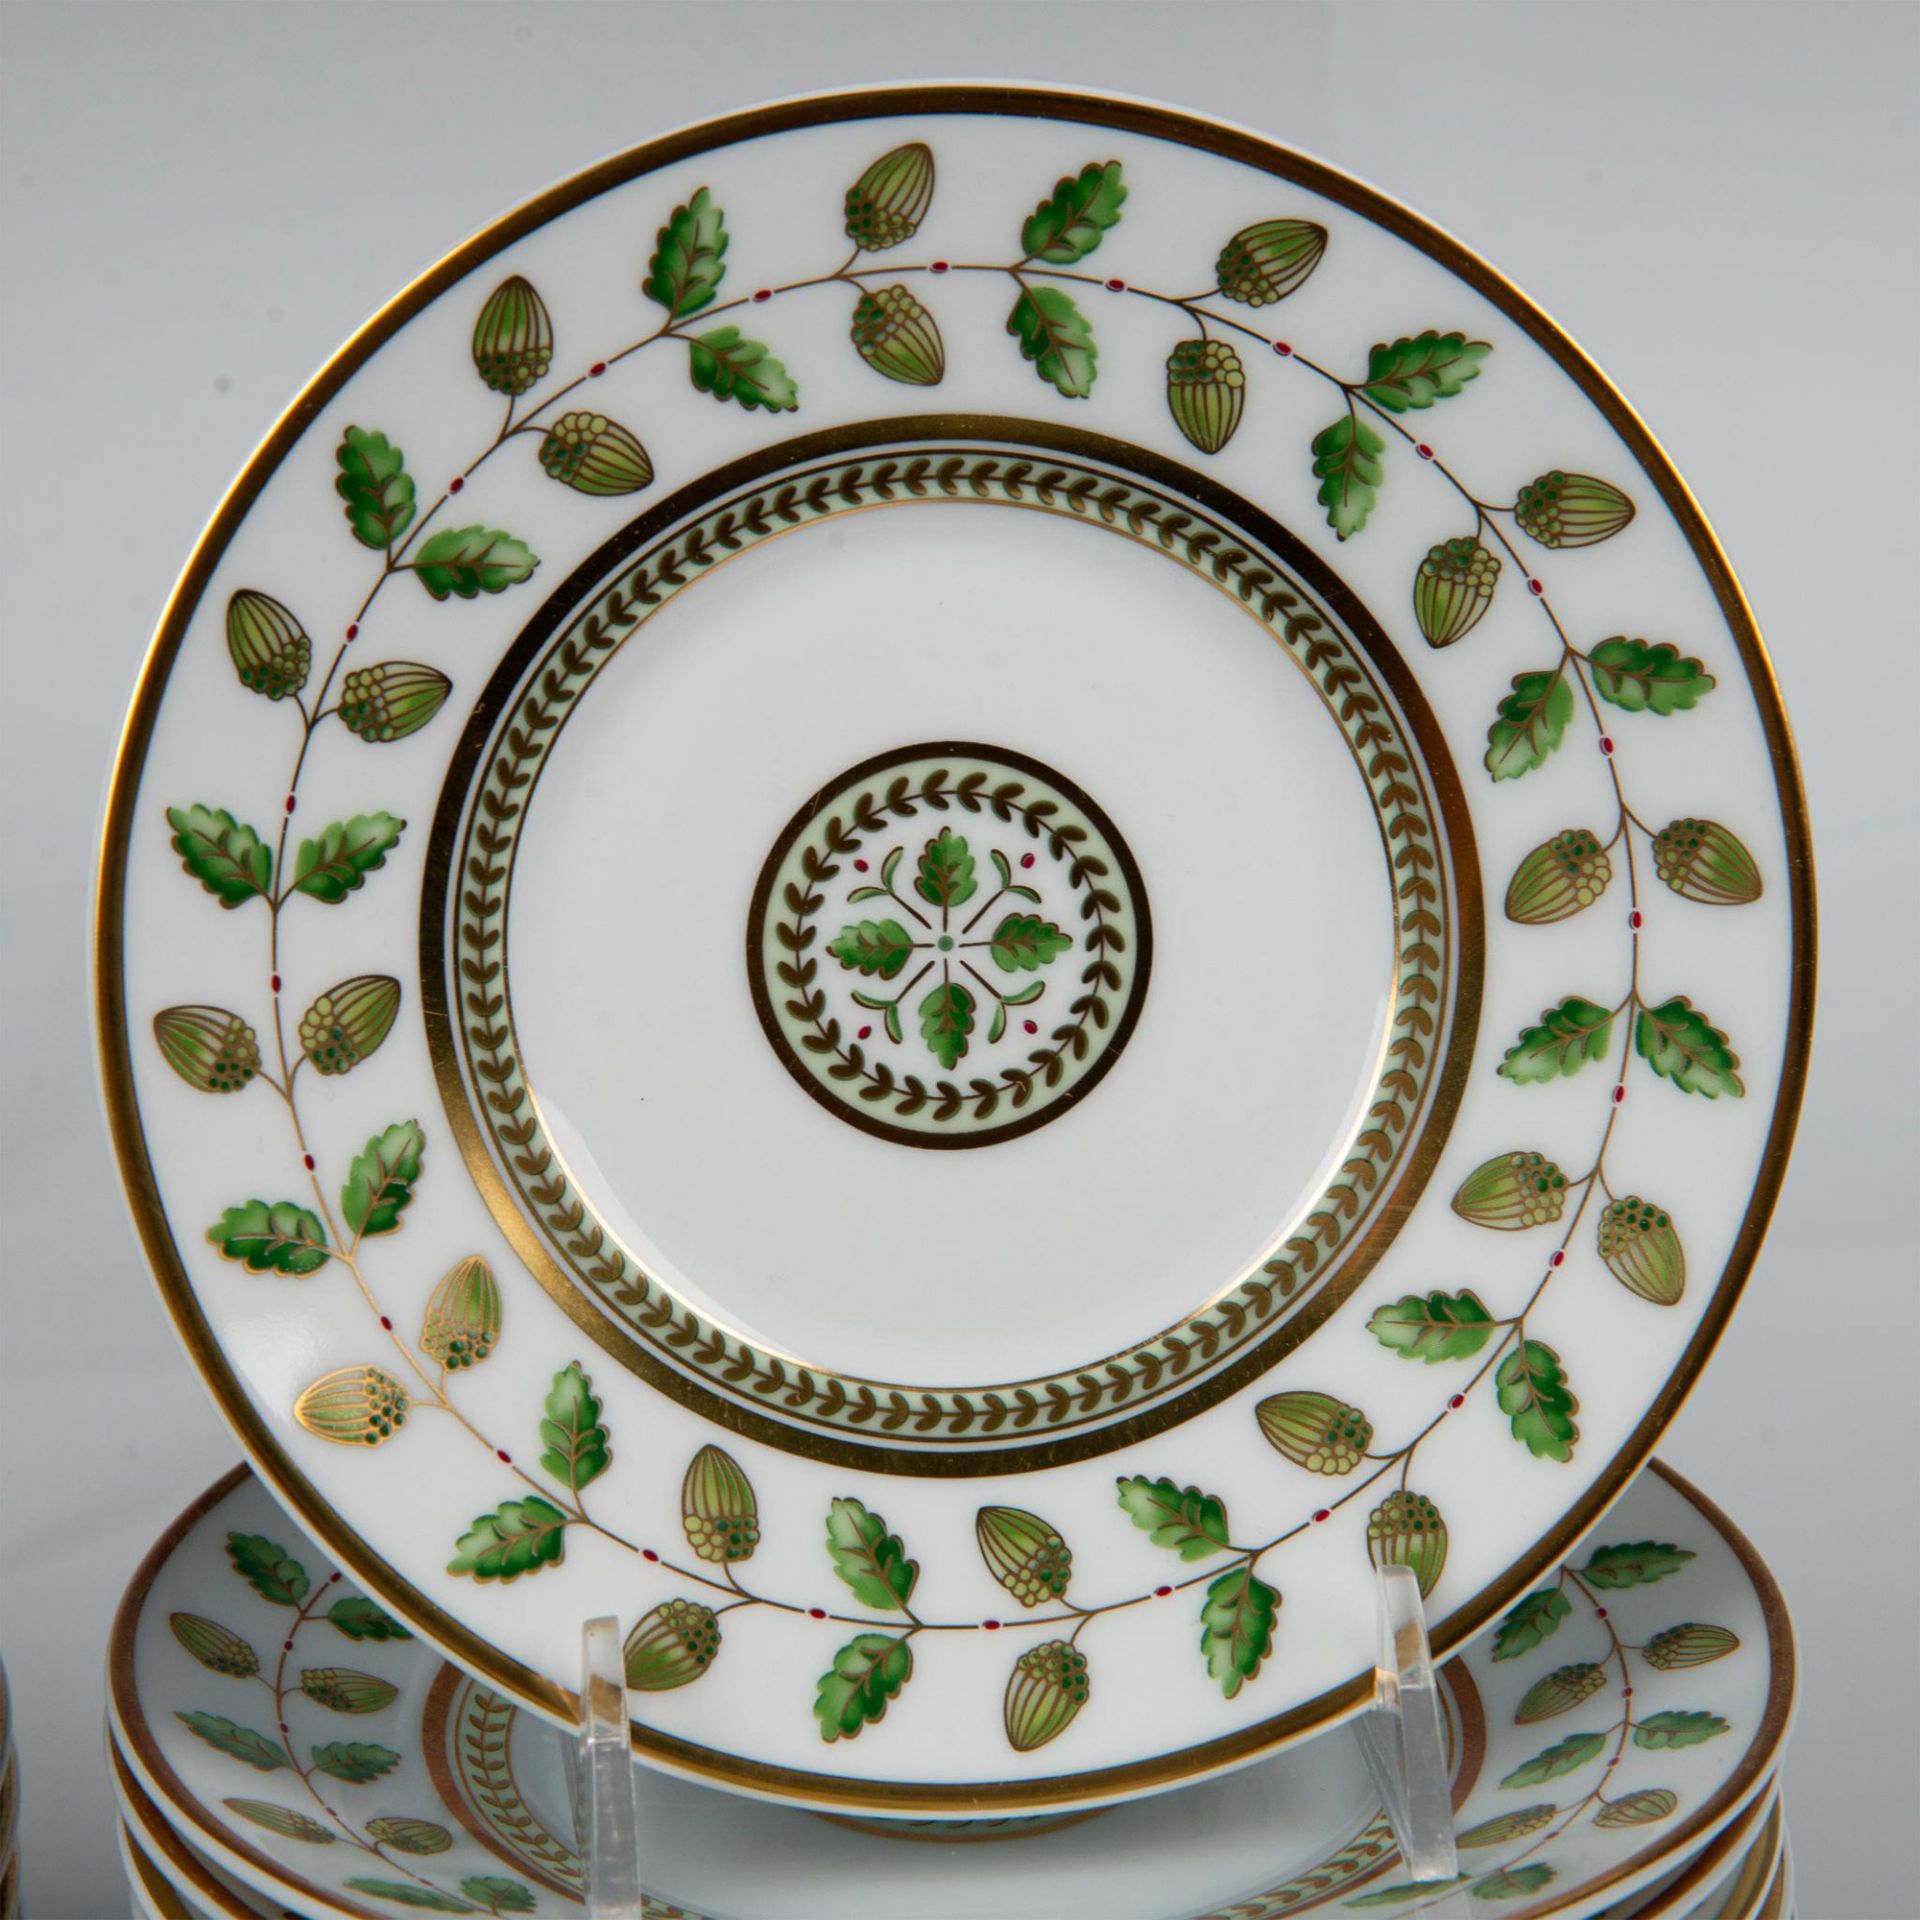 60pc Bernardaud Limoges Porcelain Service for 12, Constance - Image 3 of 6